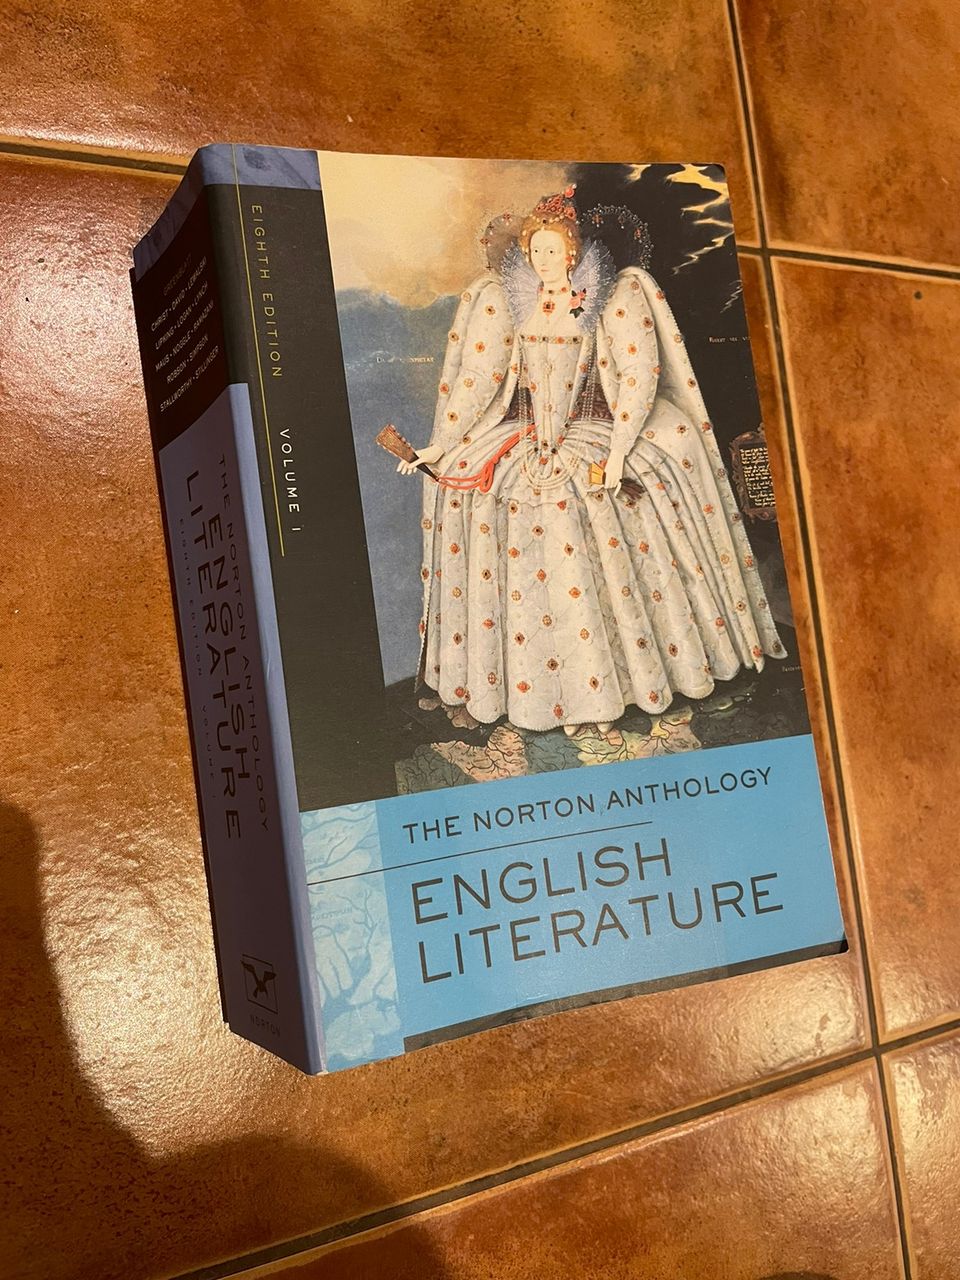 The Norton anthology english literature